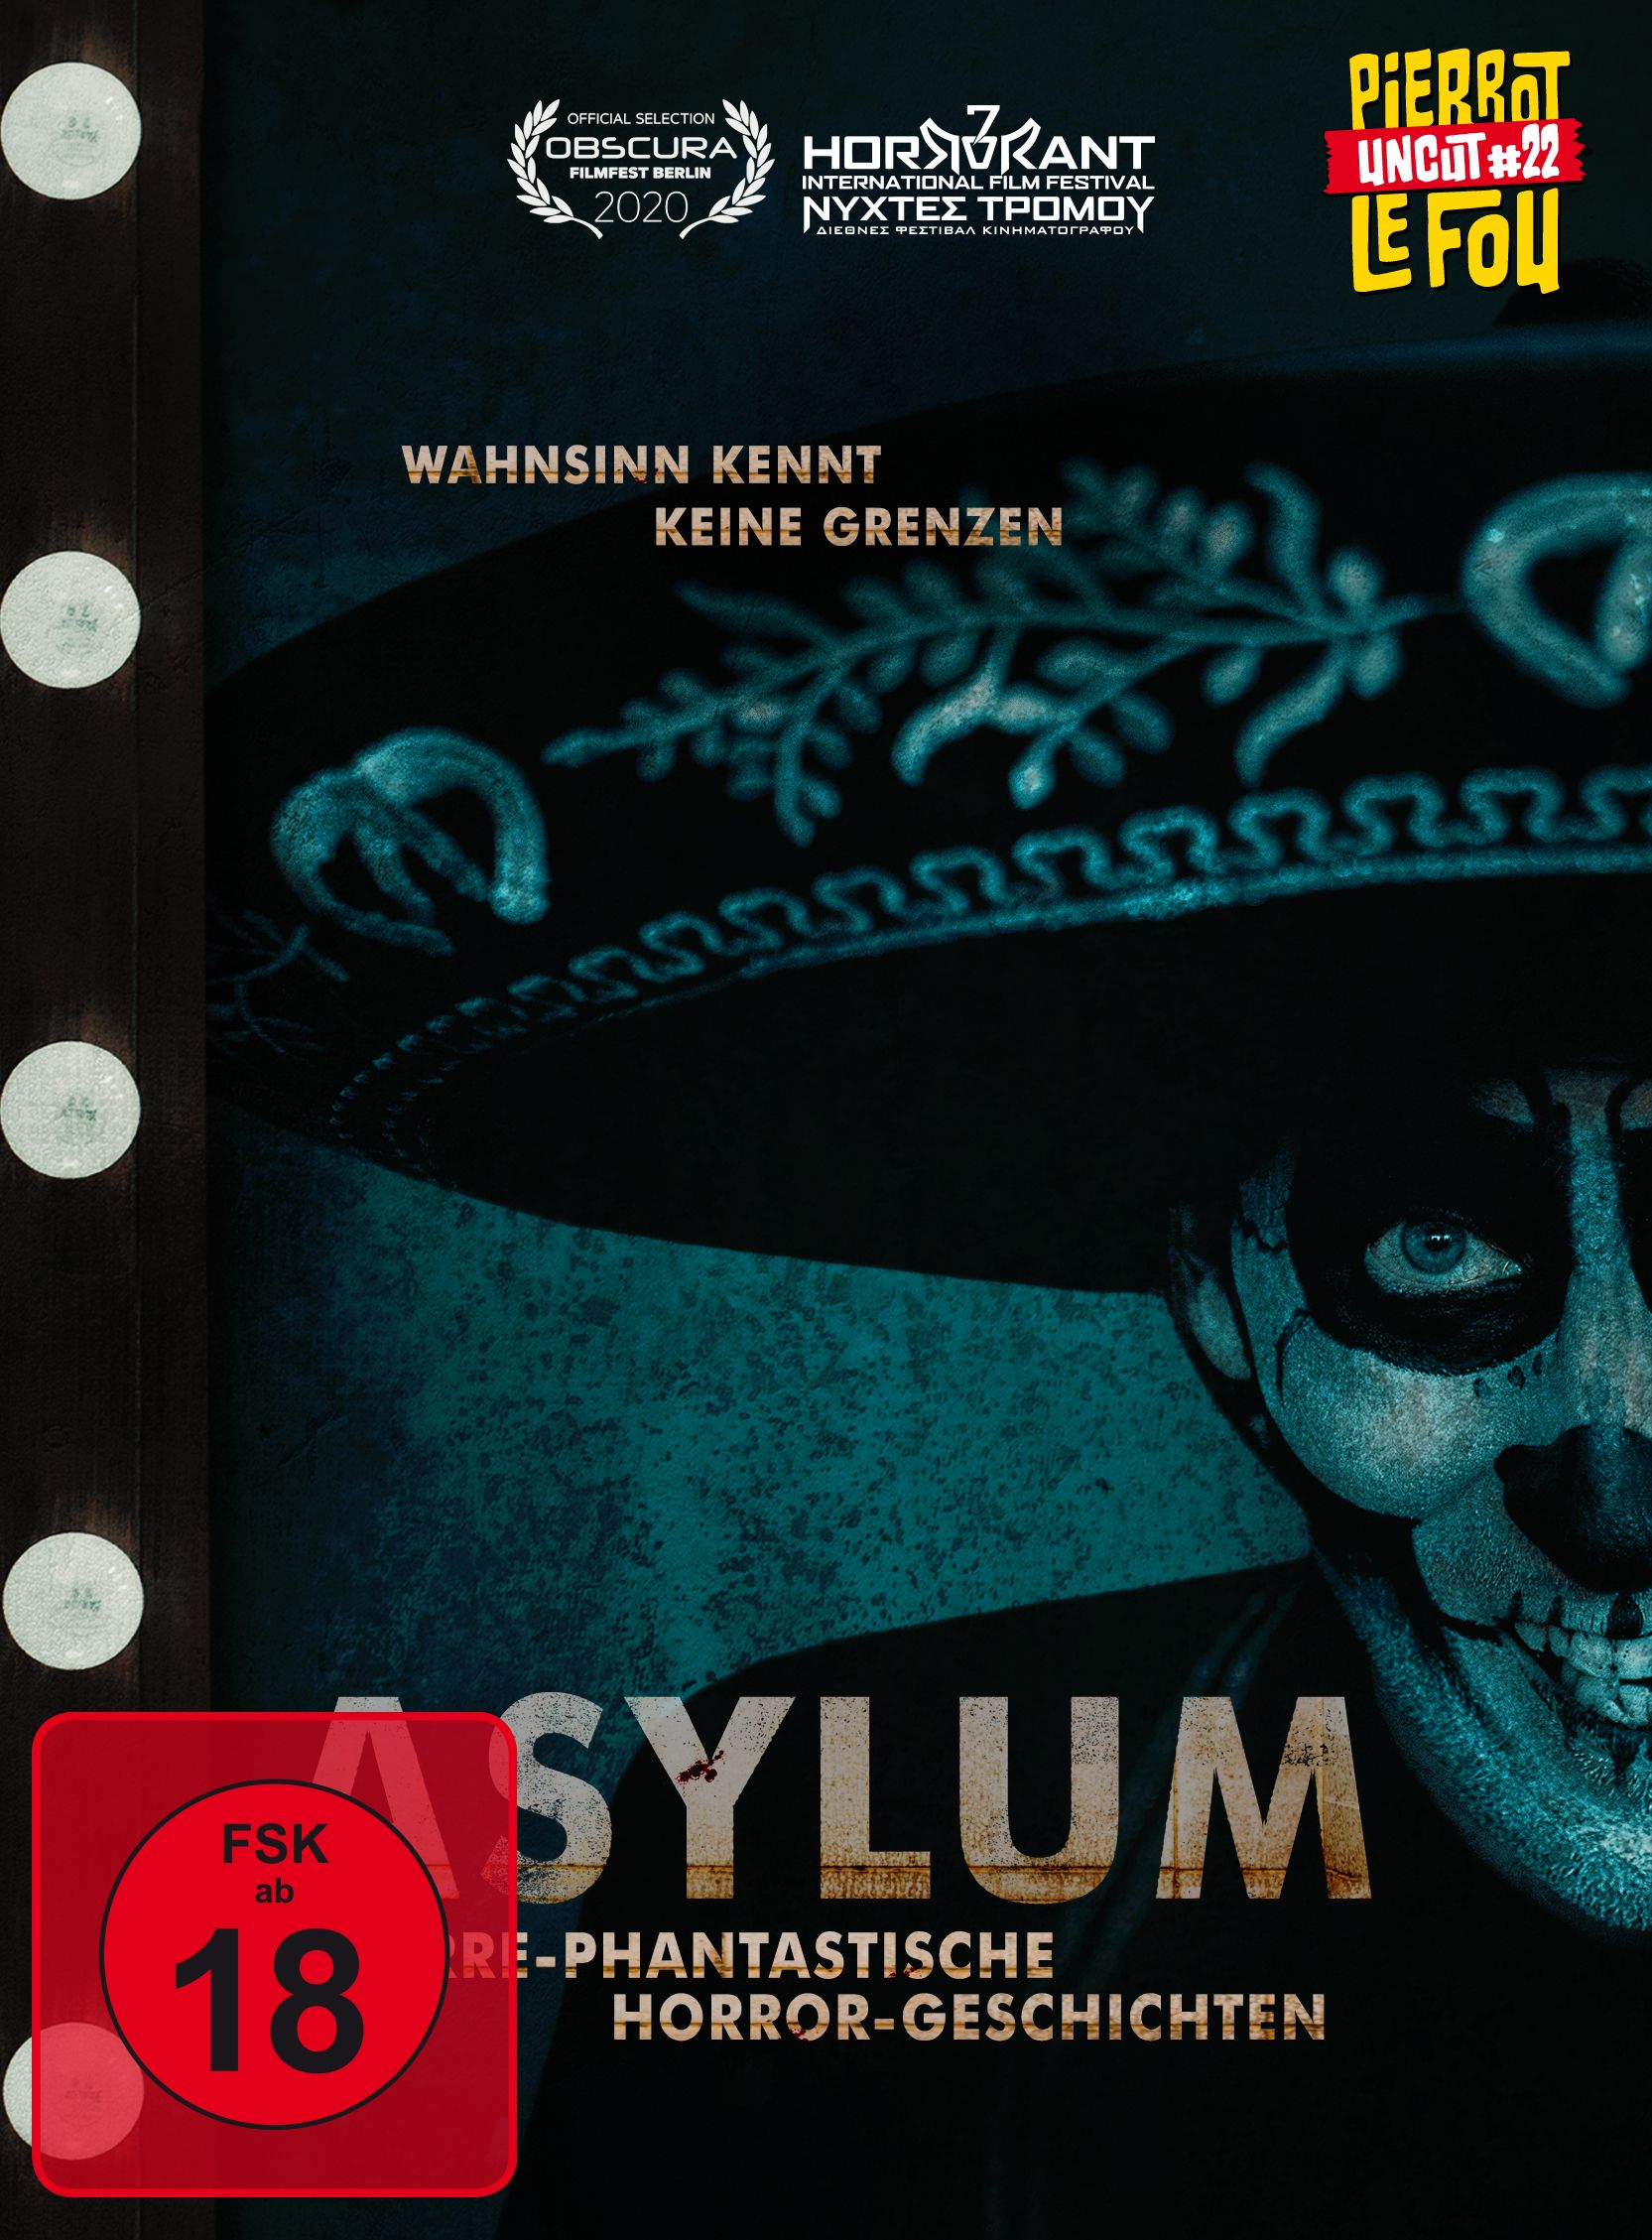 Asylum - Irre-phantastische Horror-Geschichten - Limited Edition Mediabook (uncut) (Blu-ray + DVD) - Cover C